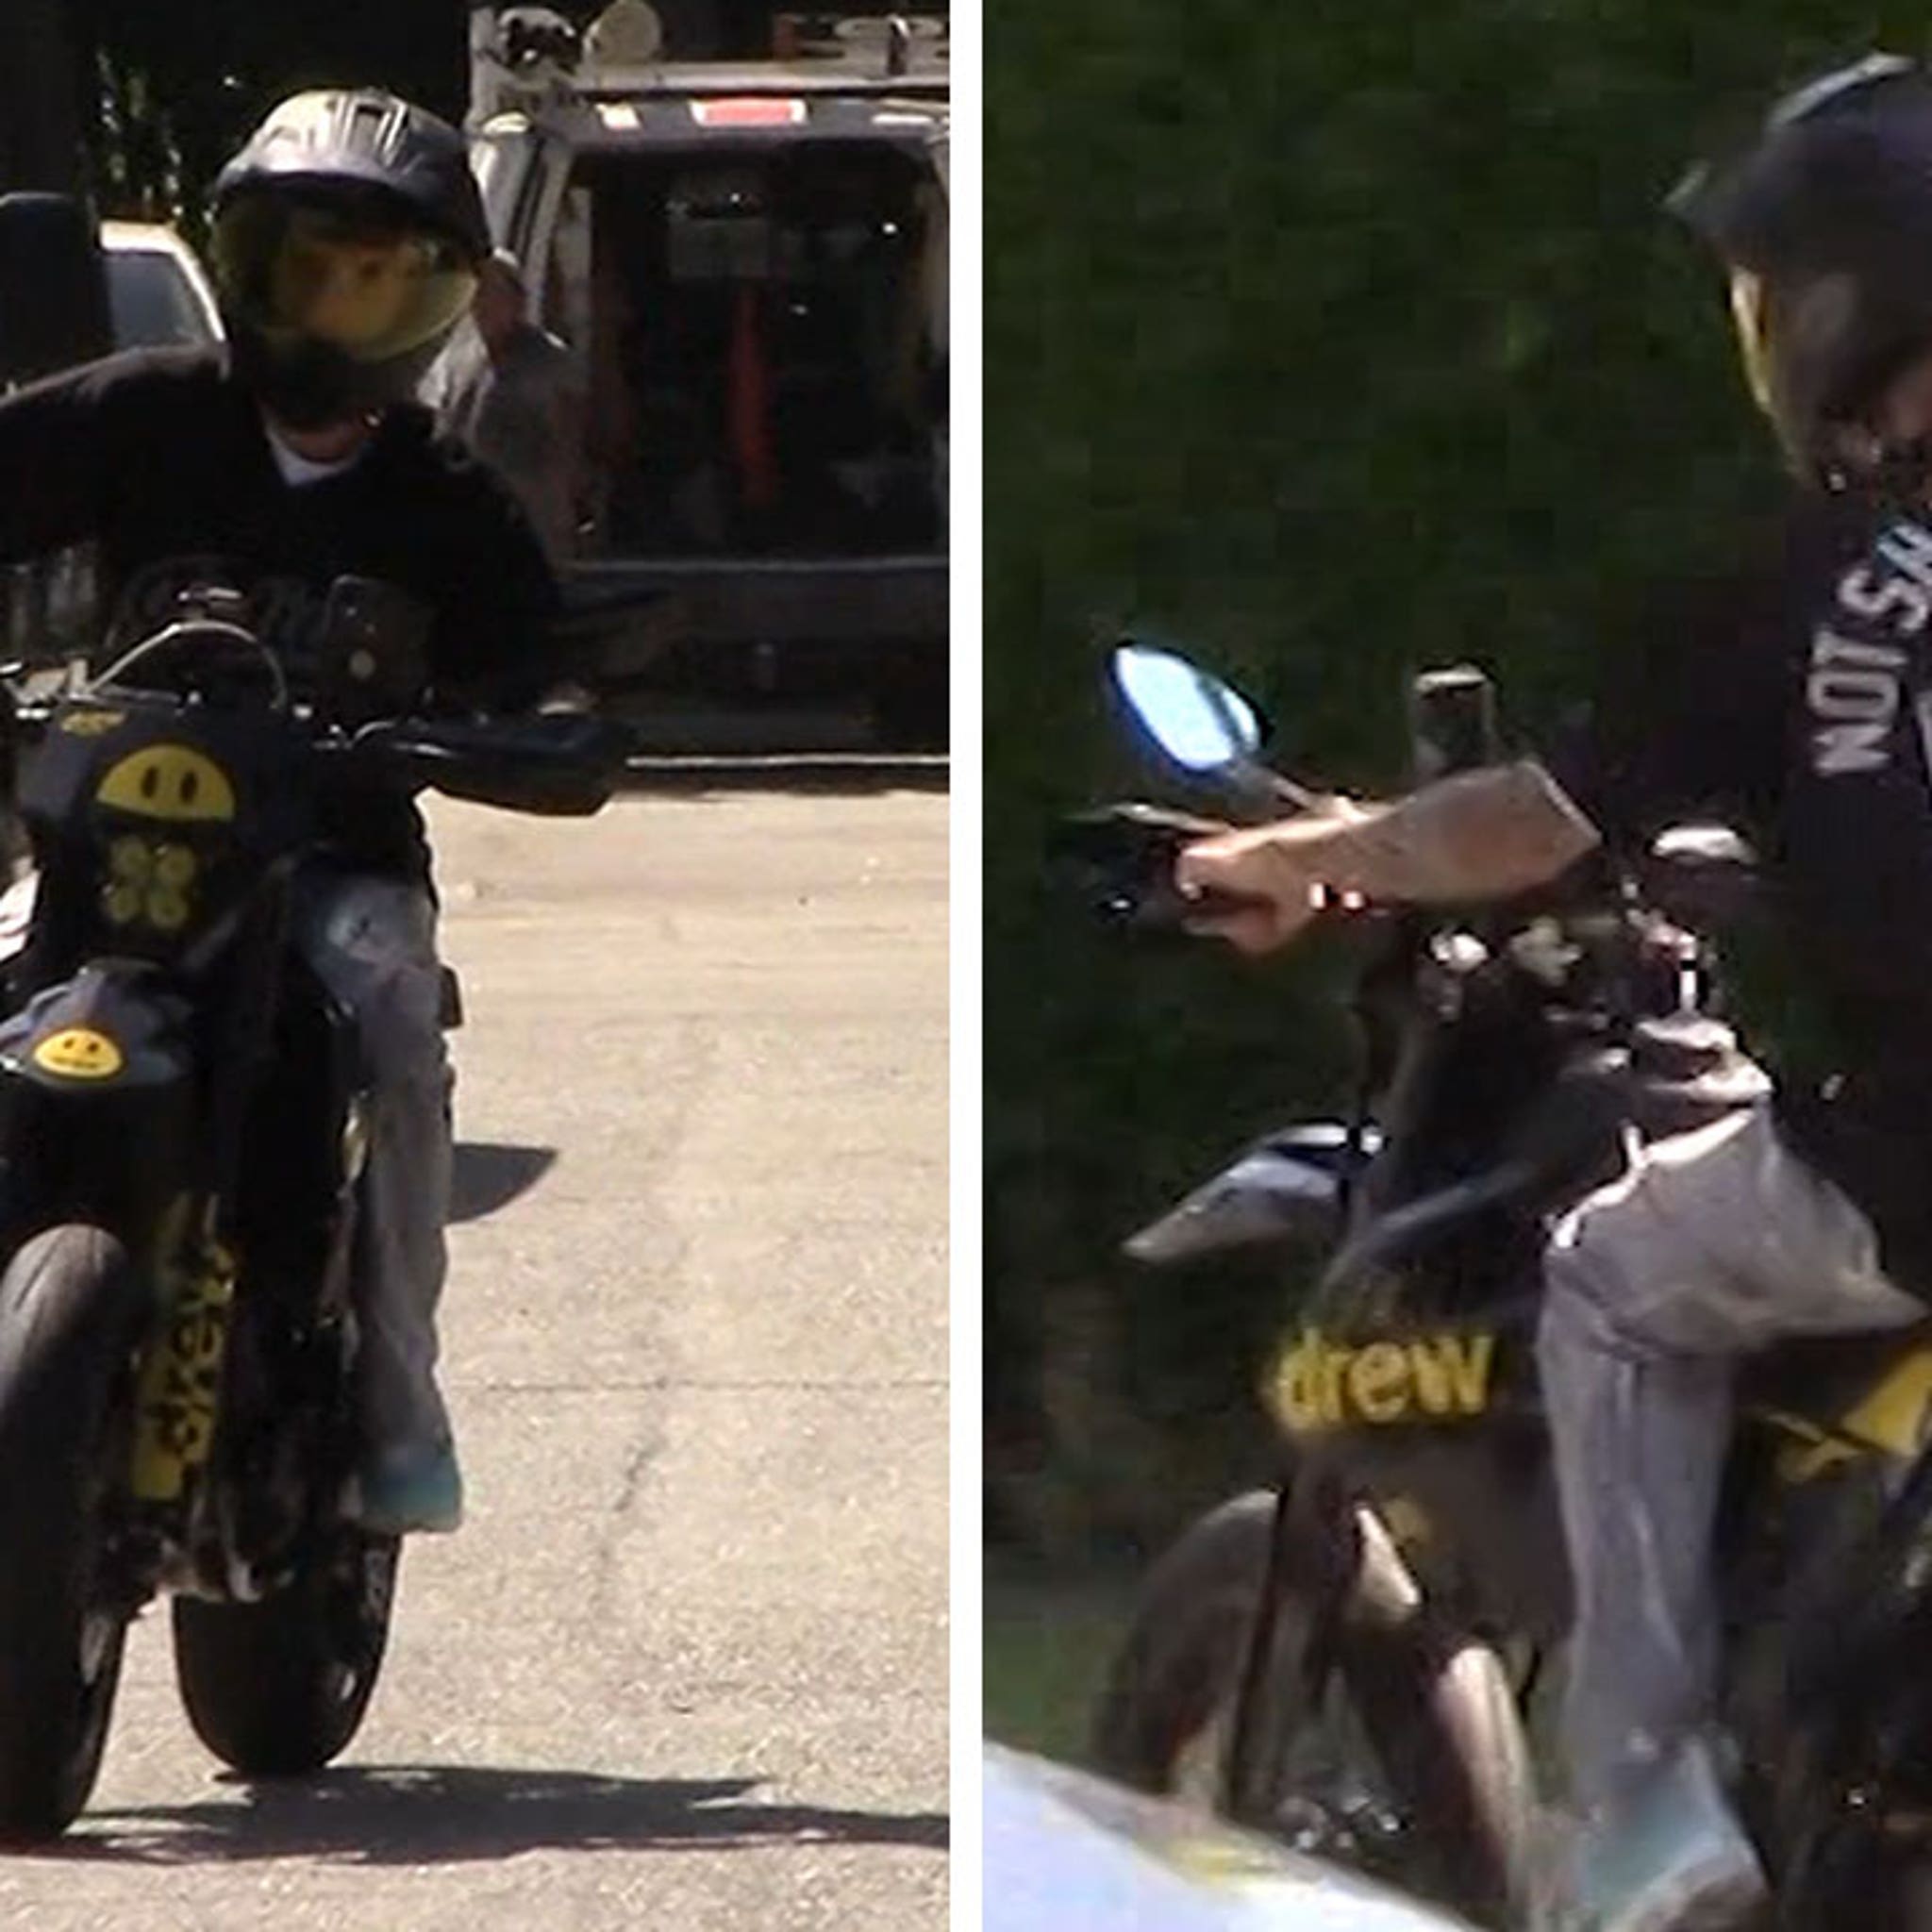 MLB: Justin Bieber wears 'Not Shane Bieber' jersey on motorbike